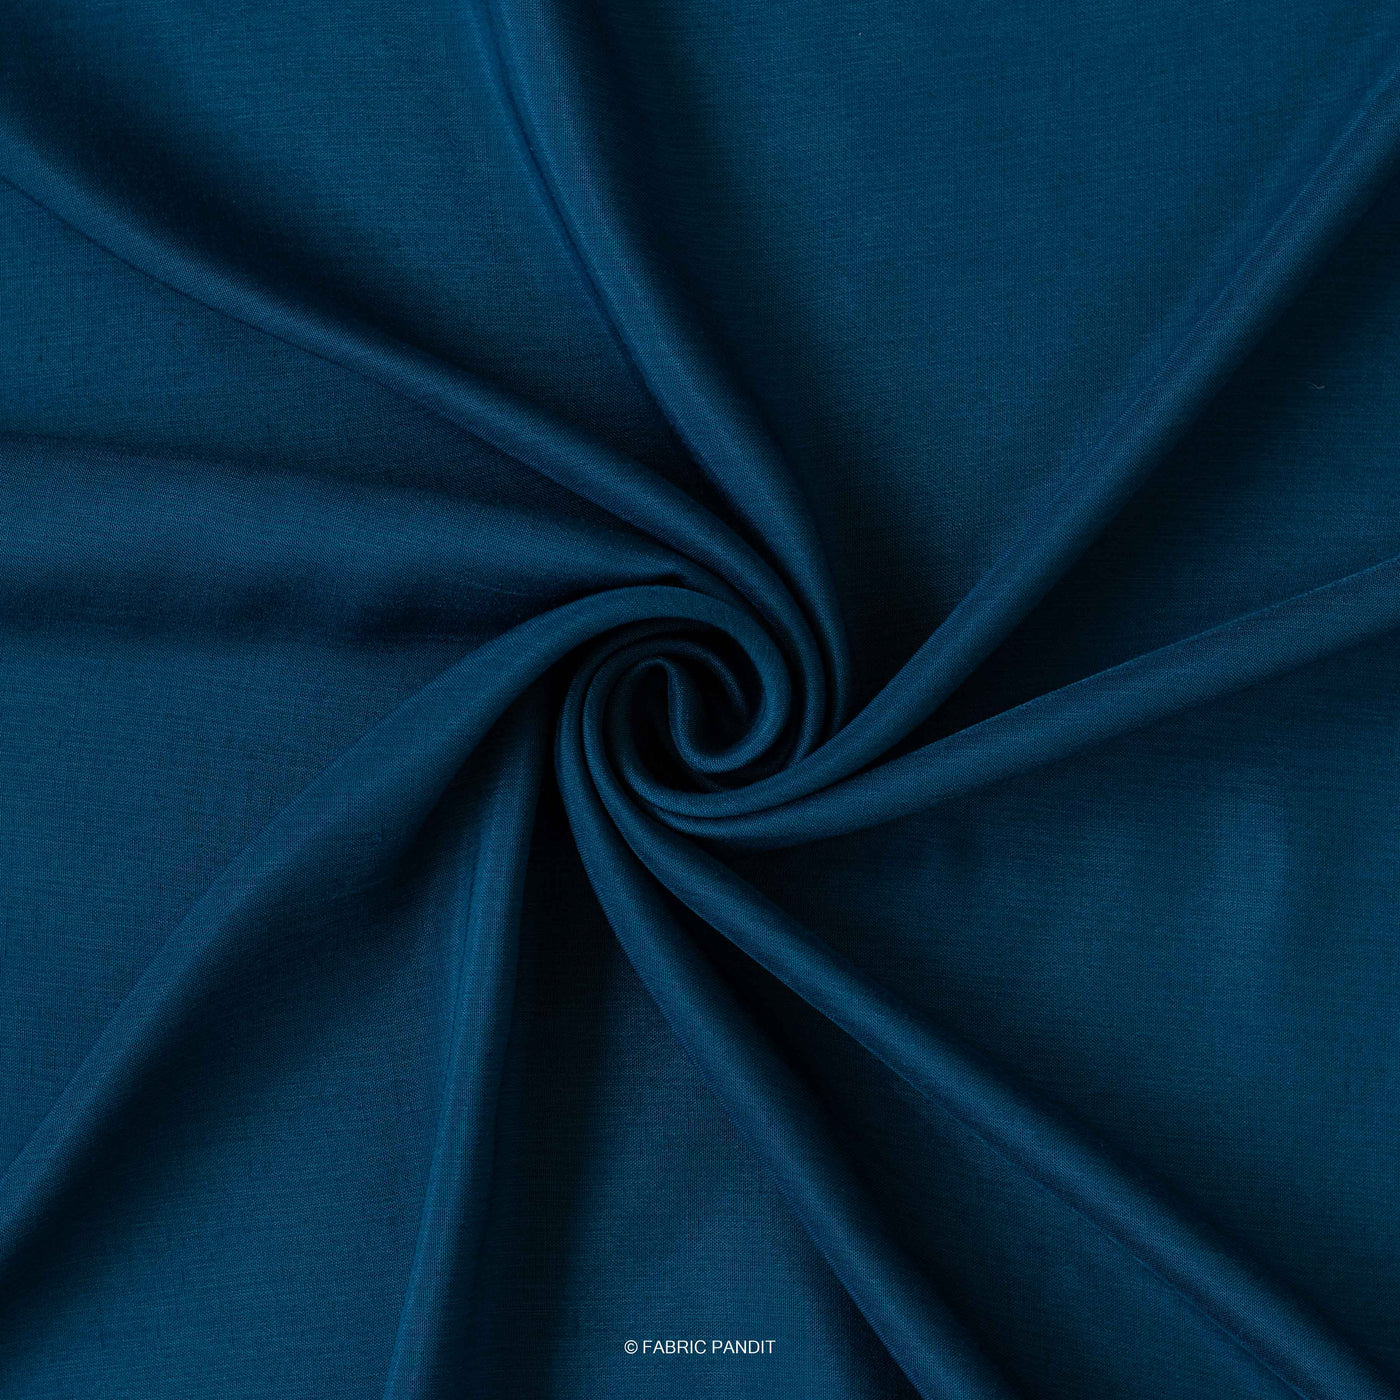 Star Print Midnight Blue Premium Cotton Fabric 44